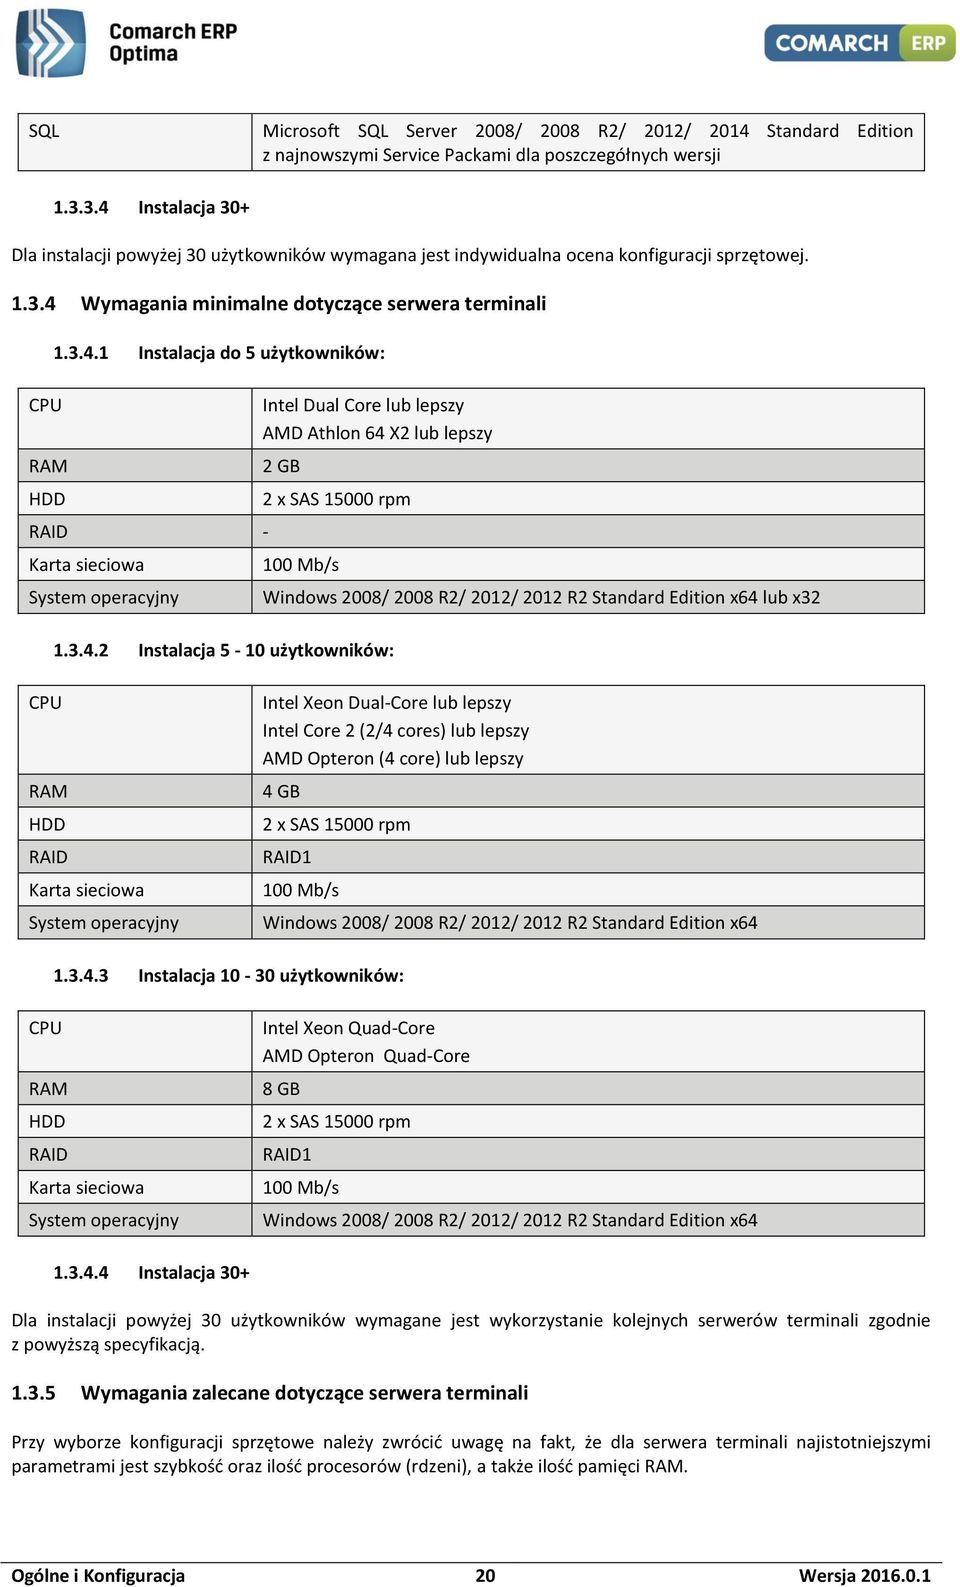 3.4.2 Instalacja 5-10 użytkowników: Windows 2008/ 2008 R2/ 2012/ 2012 R2 Standard Edition x64 lub x32 CPU RAM HDD RAID Karta sieciowa System operacyjny Intel Xeon Dual-Core lub lepszy Intel Core 2